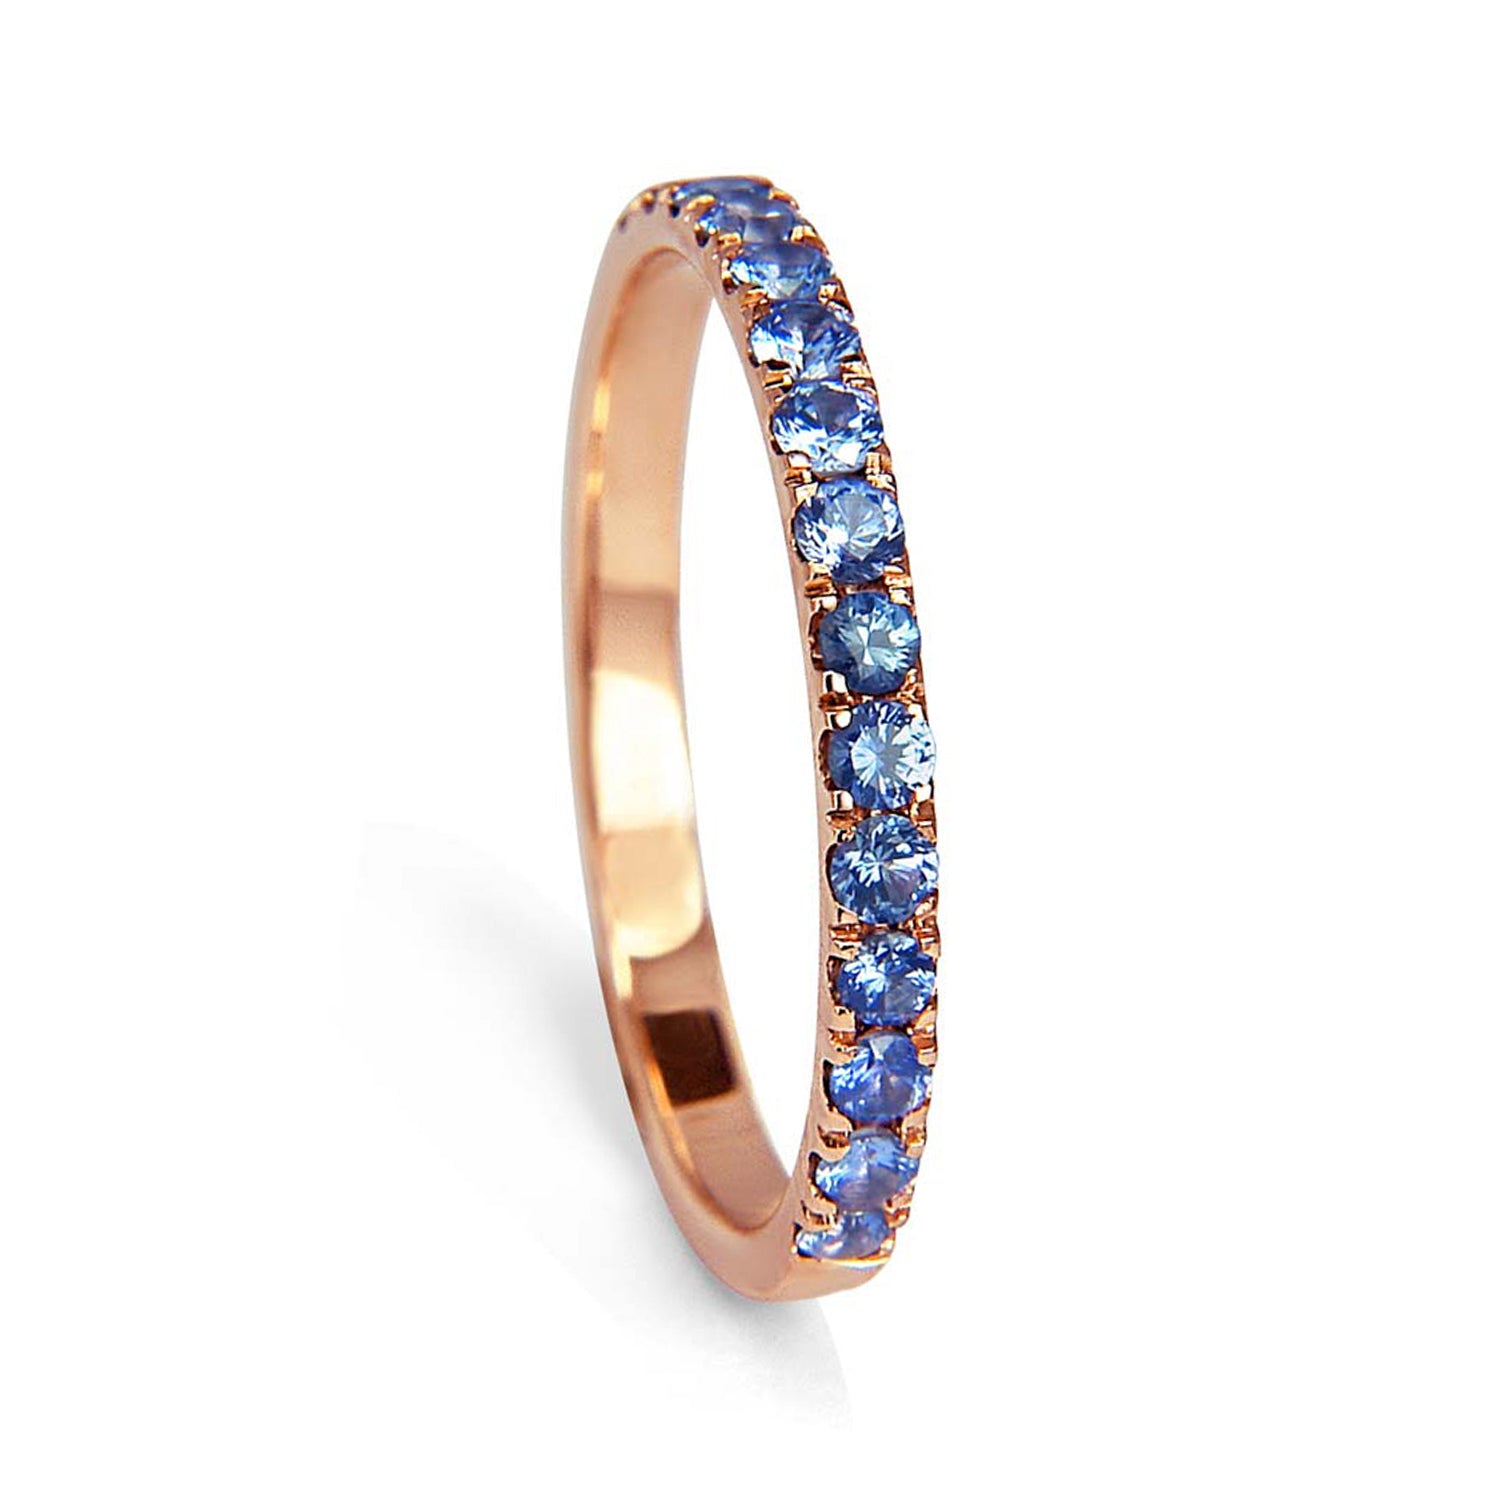 Bespoke Caroline ring - Fairtrade rose gold and fair-traded blue sapphires